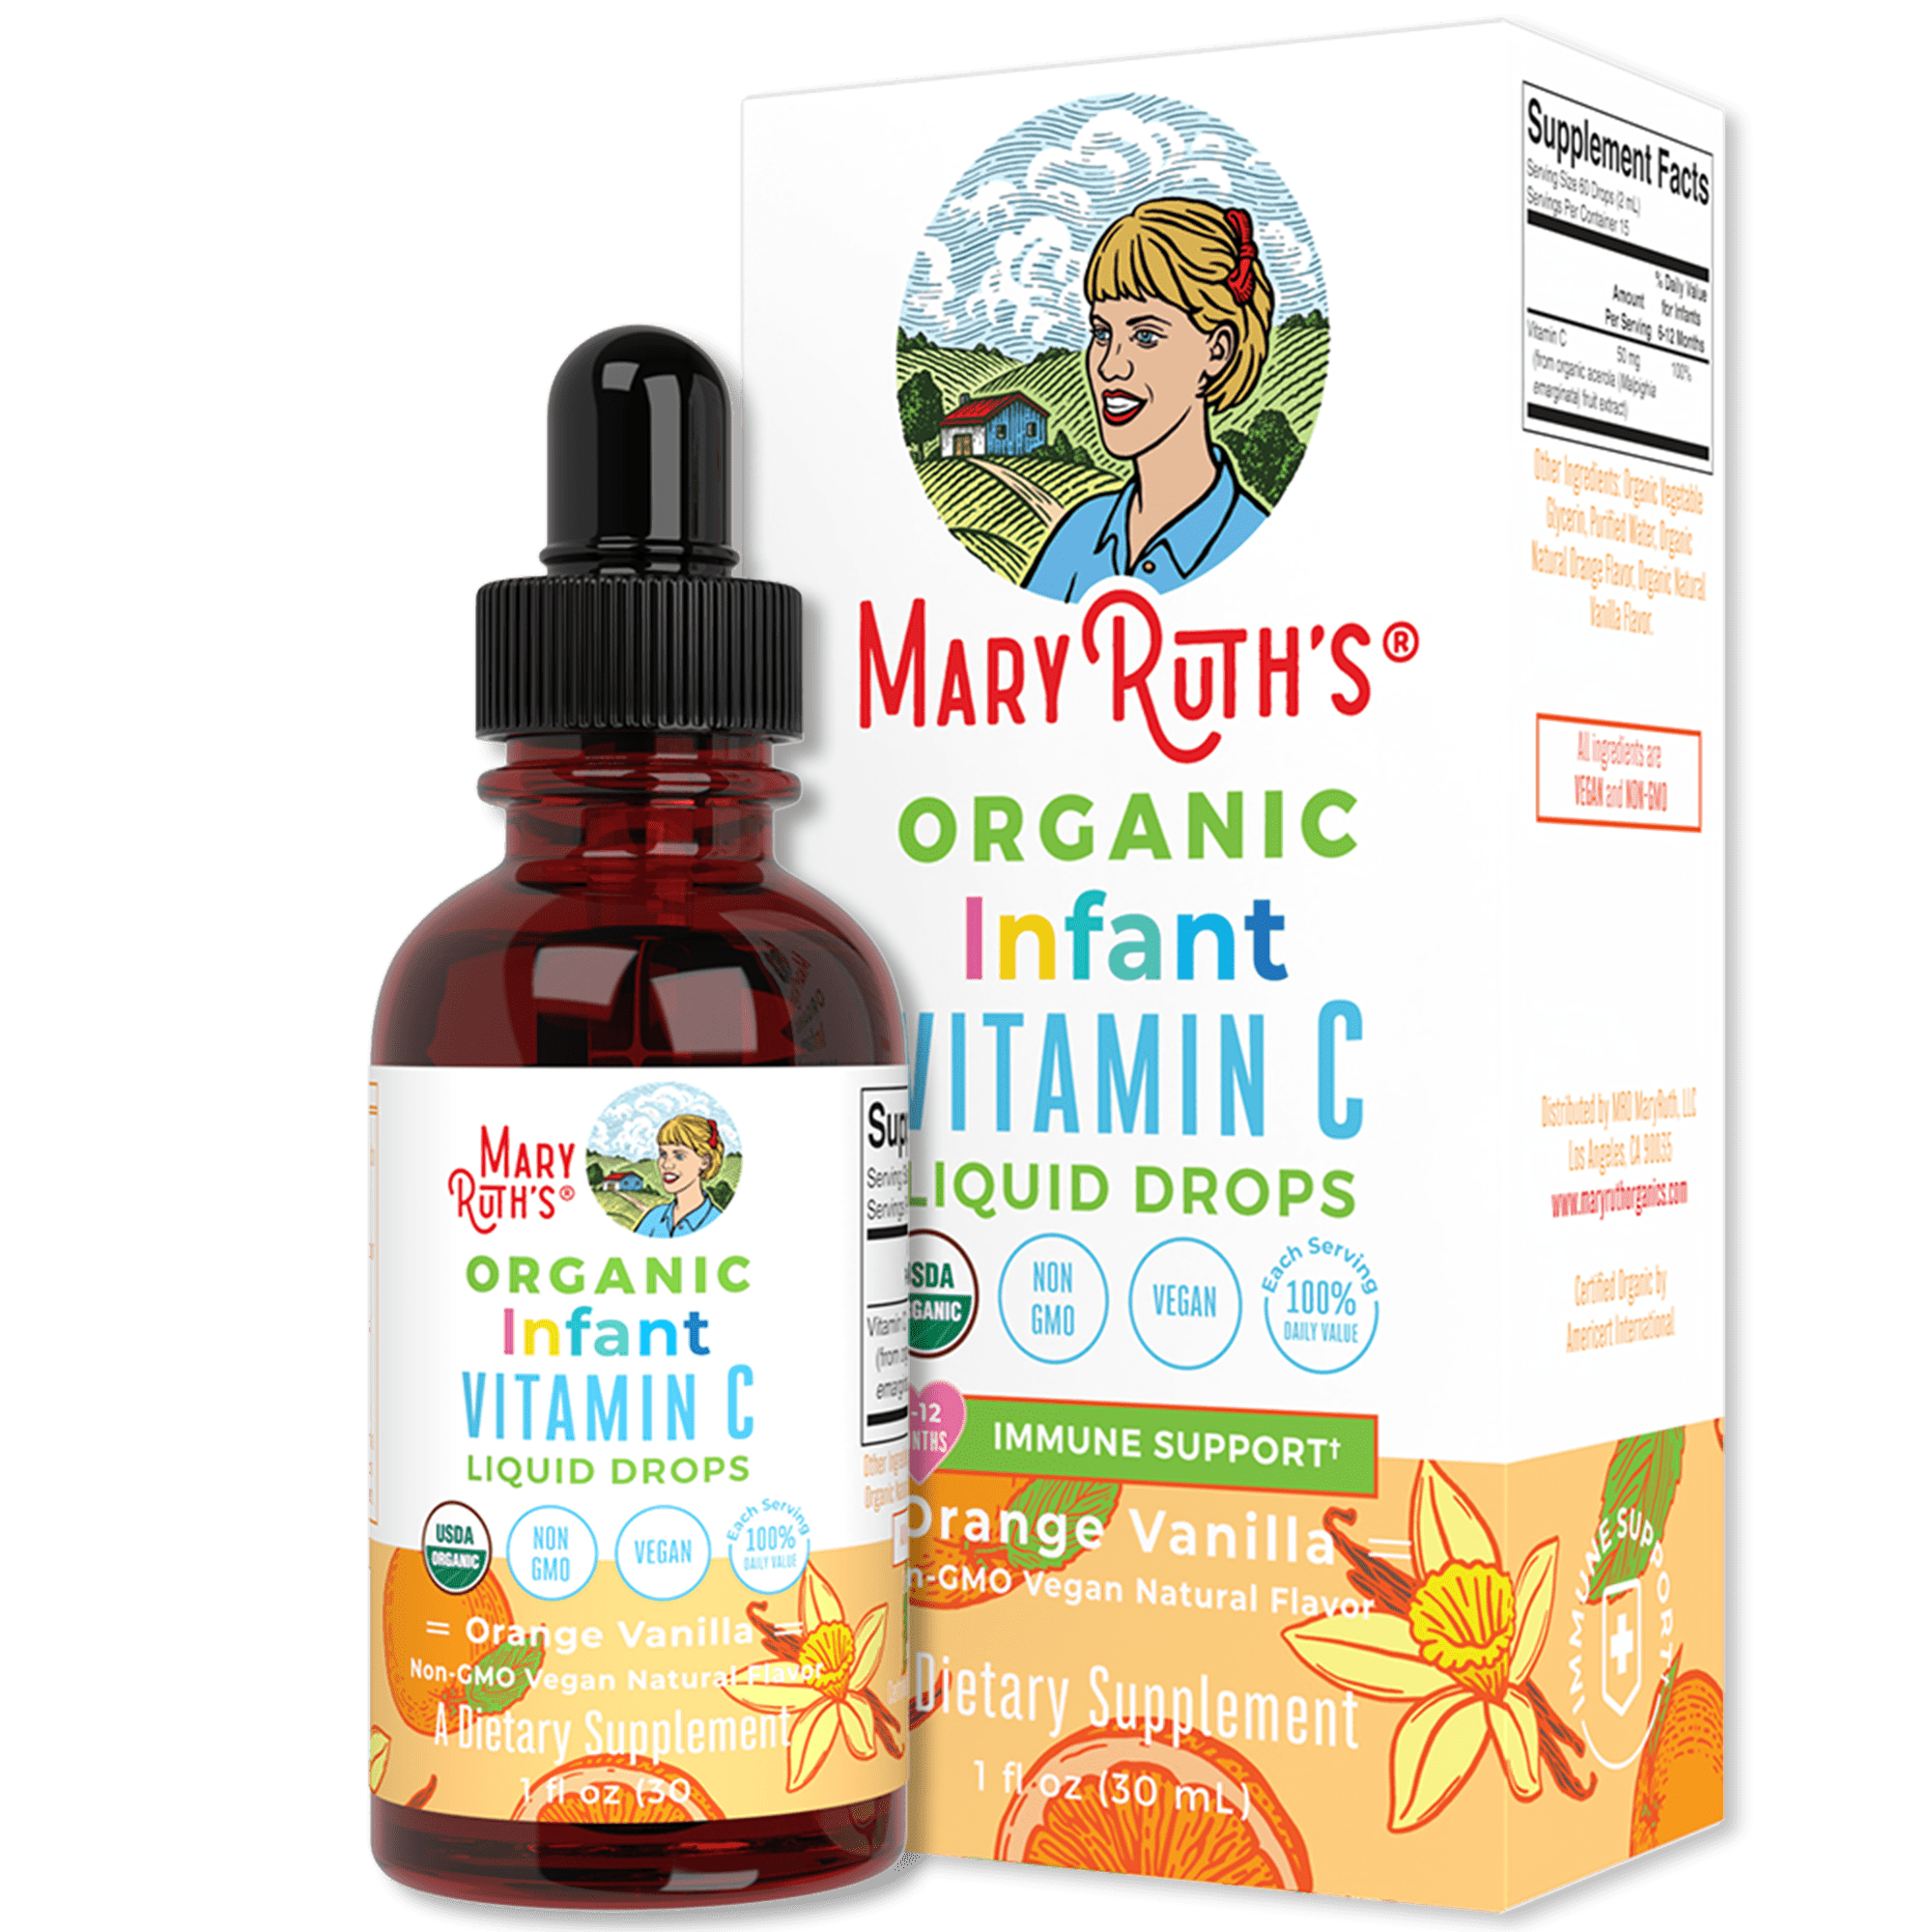 MaryRuth's Organic Infants Vitamin C Liquid Drops, 1 fl. oz., Immune Boosting Supplement